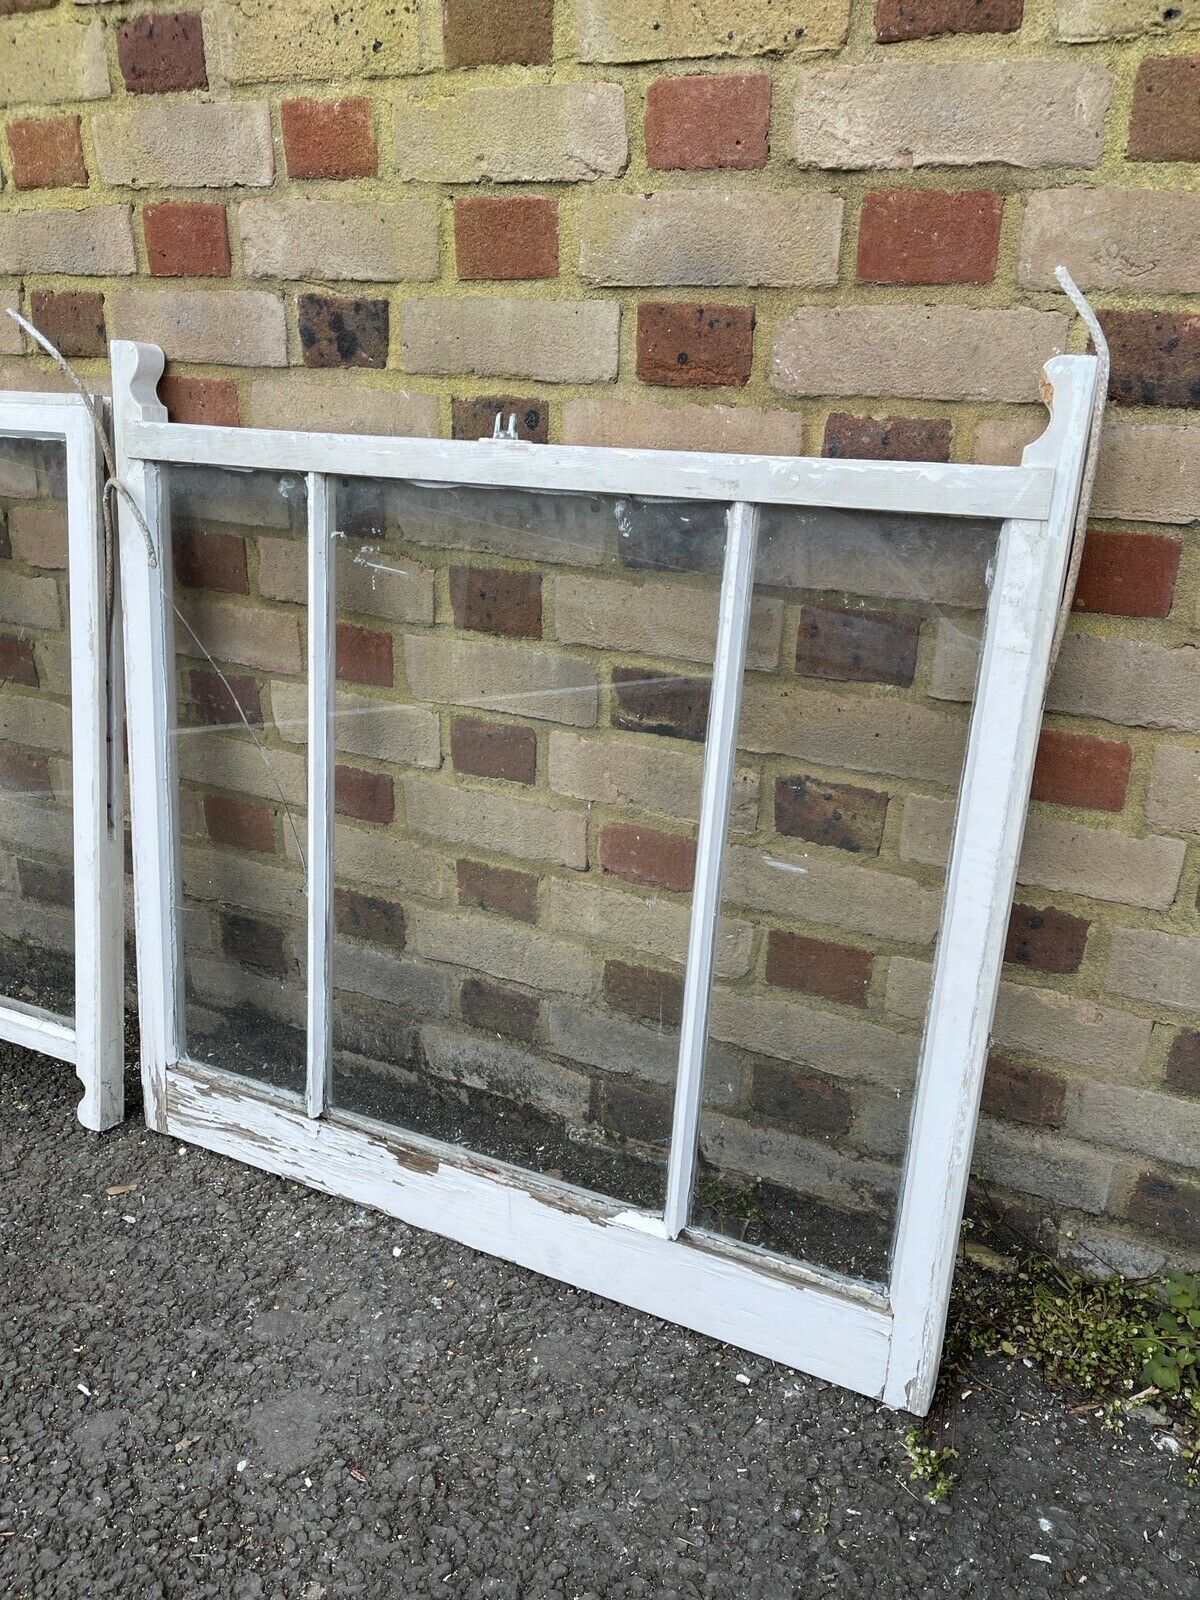 Pair Of Reclaimed Old Victorian Edwardian Three Wooden Panel Sash Windows